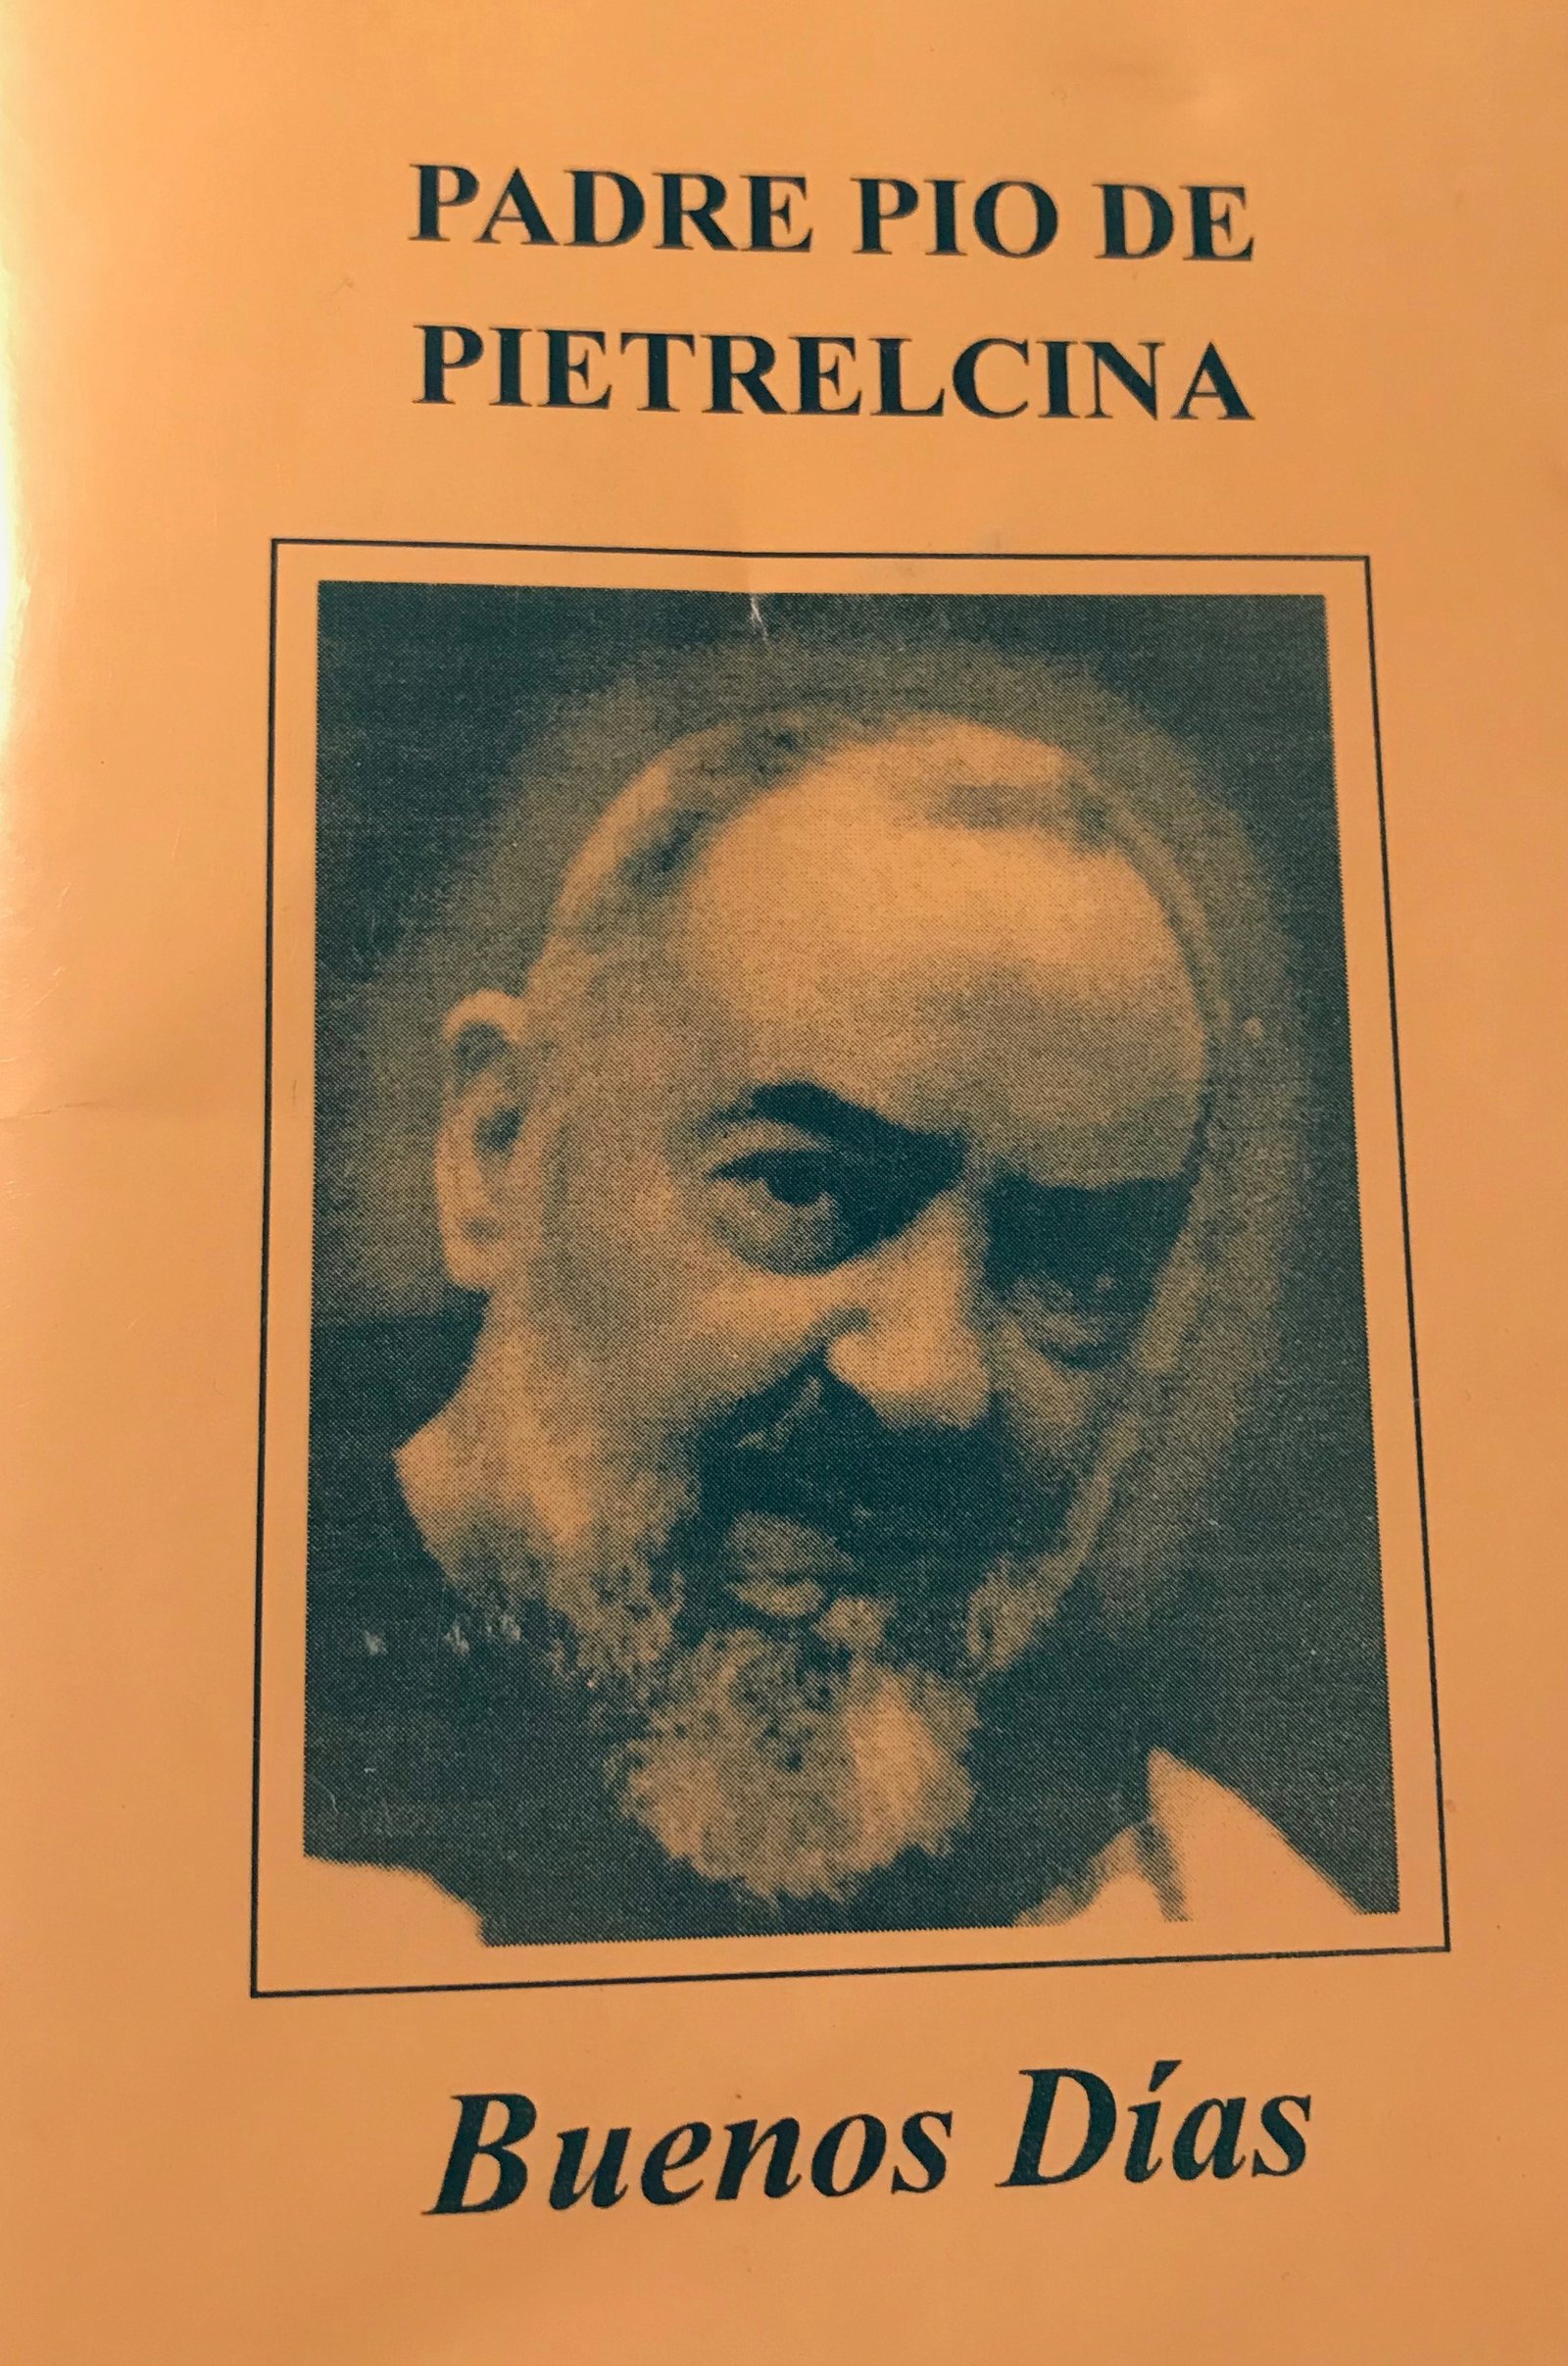 Padre Pío'